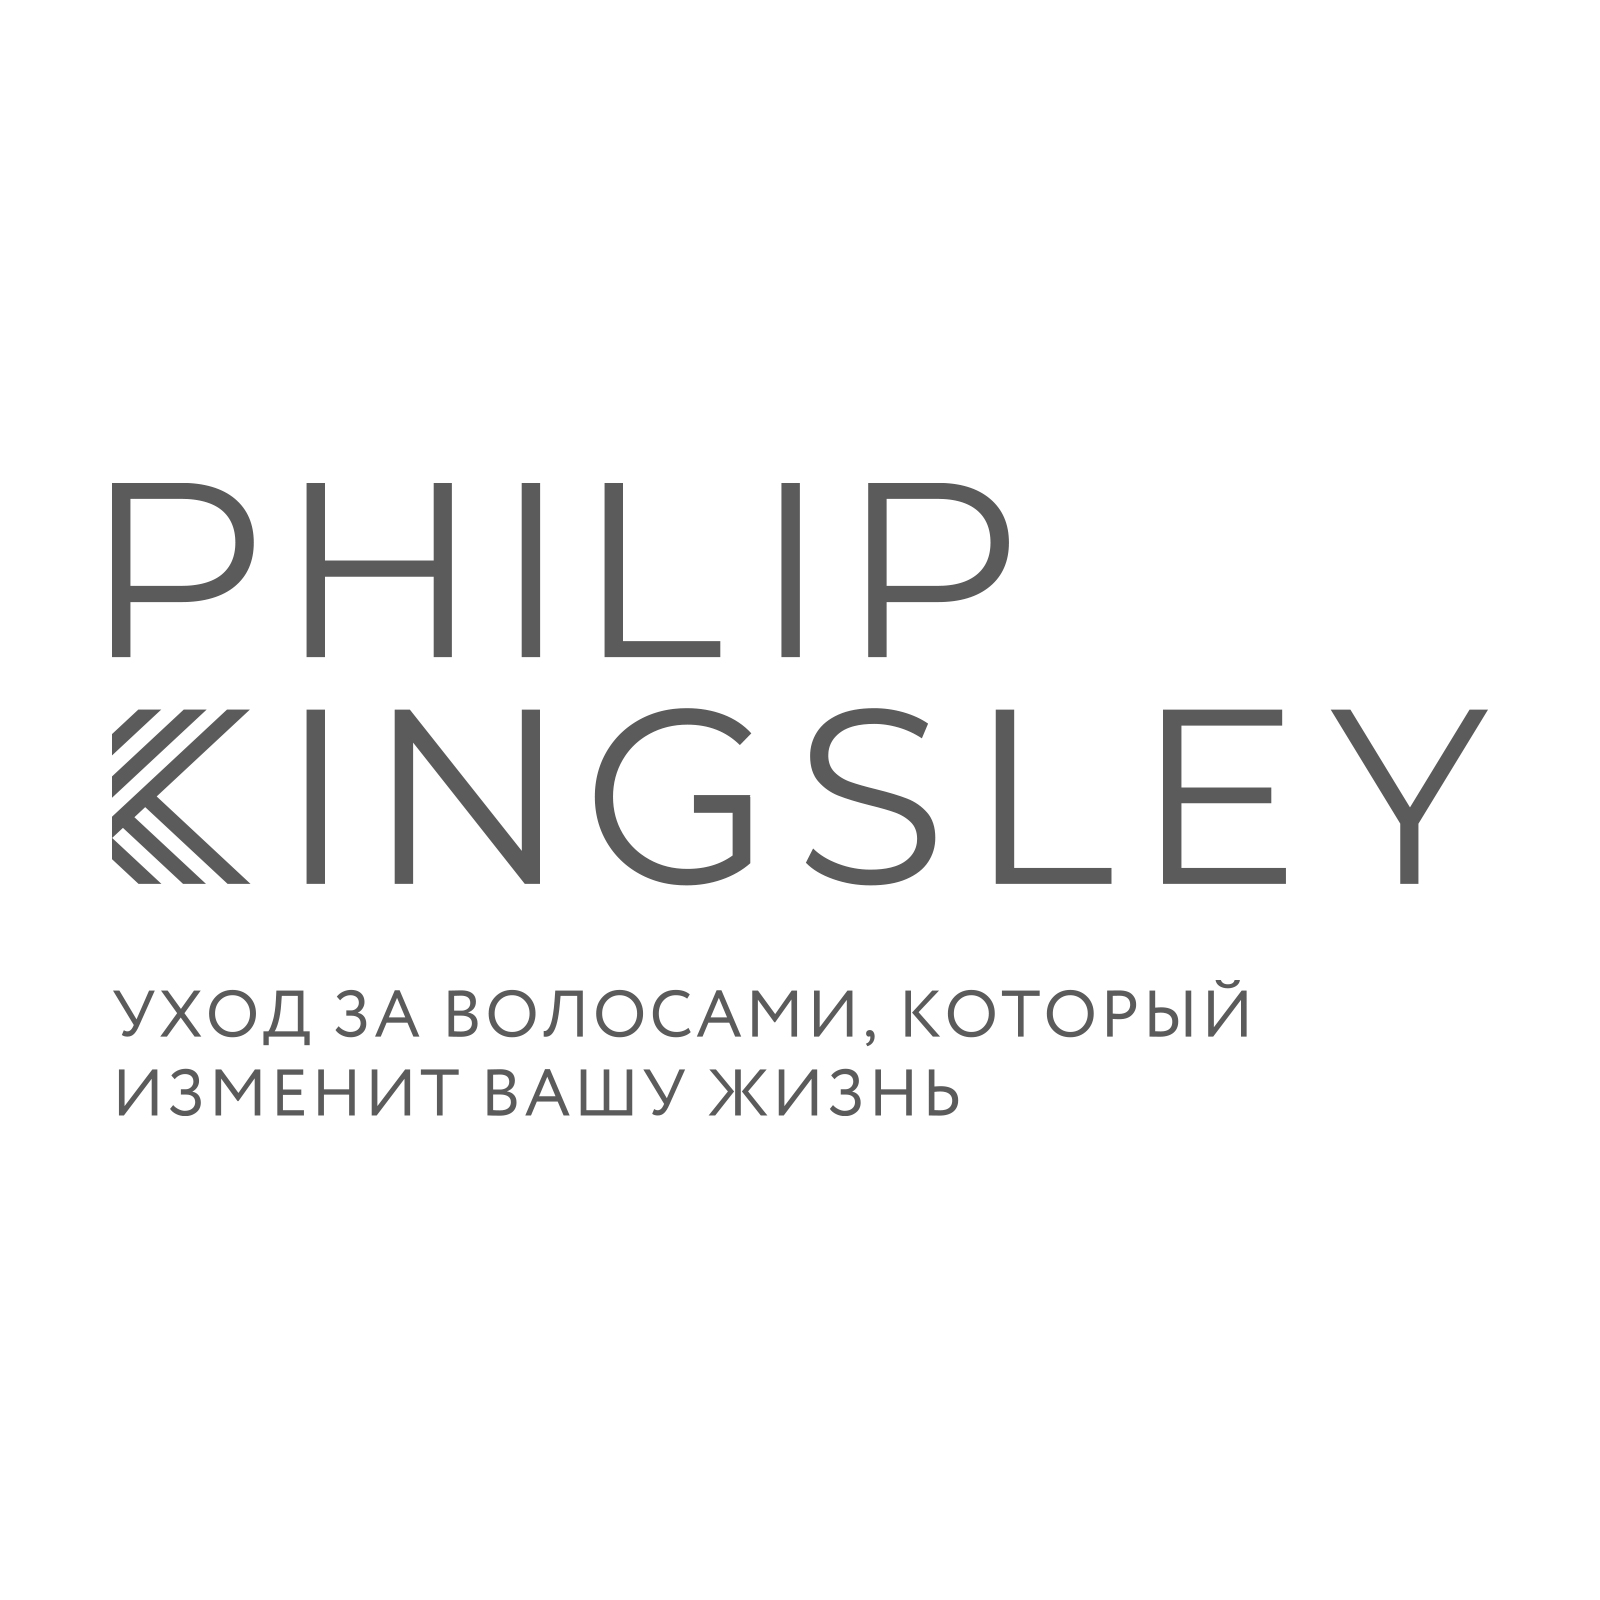 PHILIP KINGSLEY